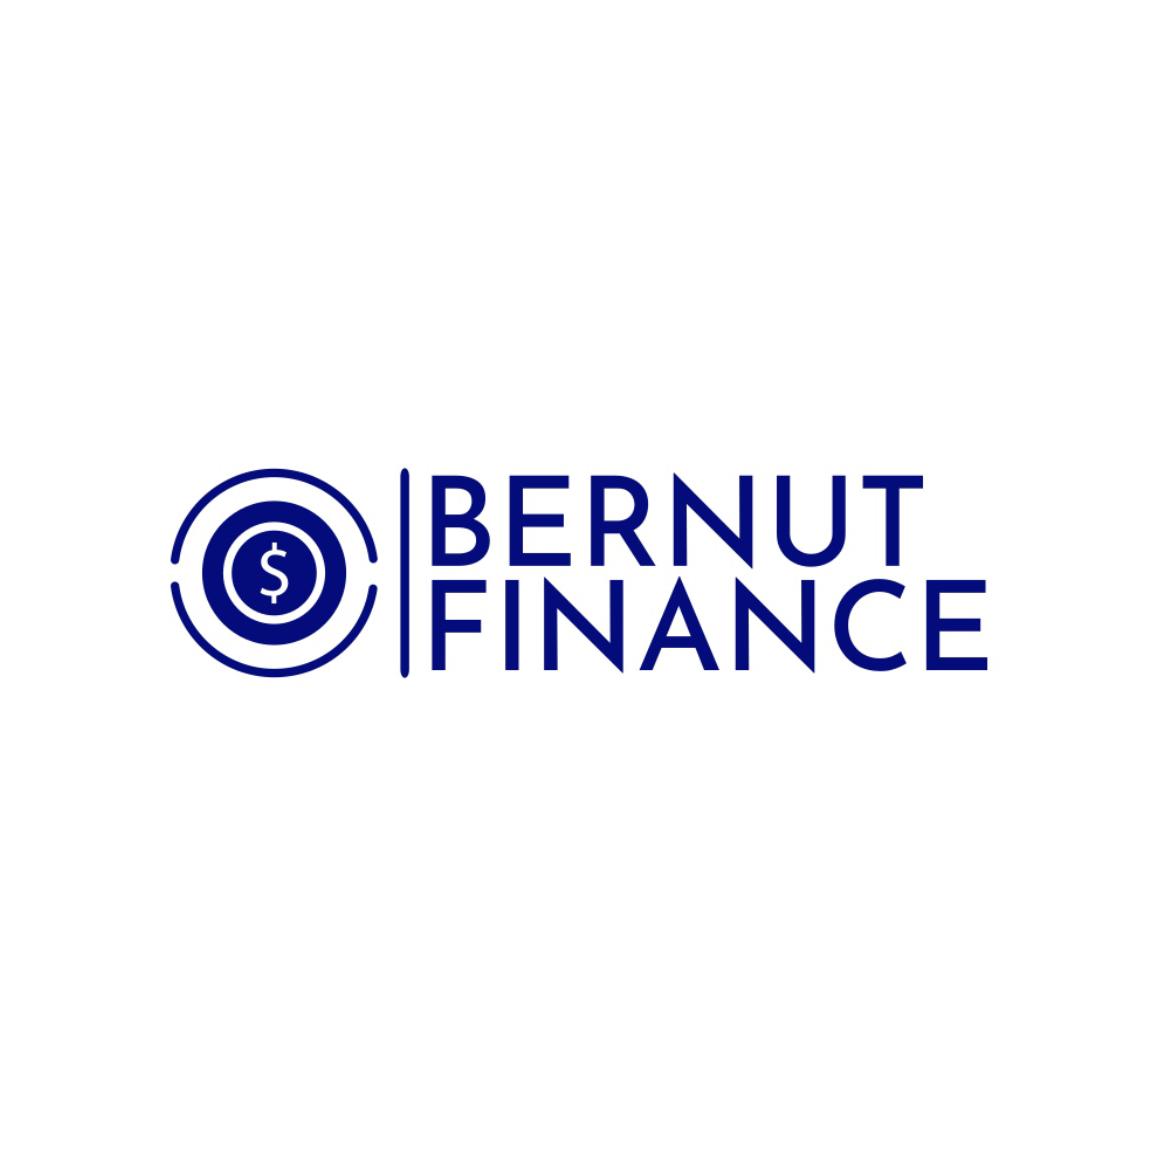 Bernut Finance's images